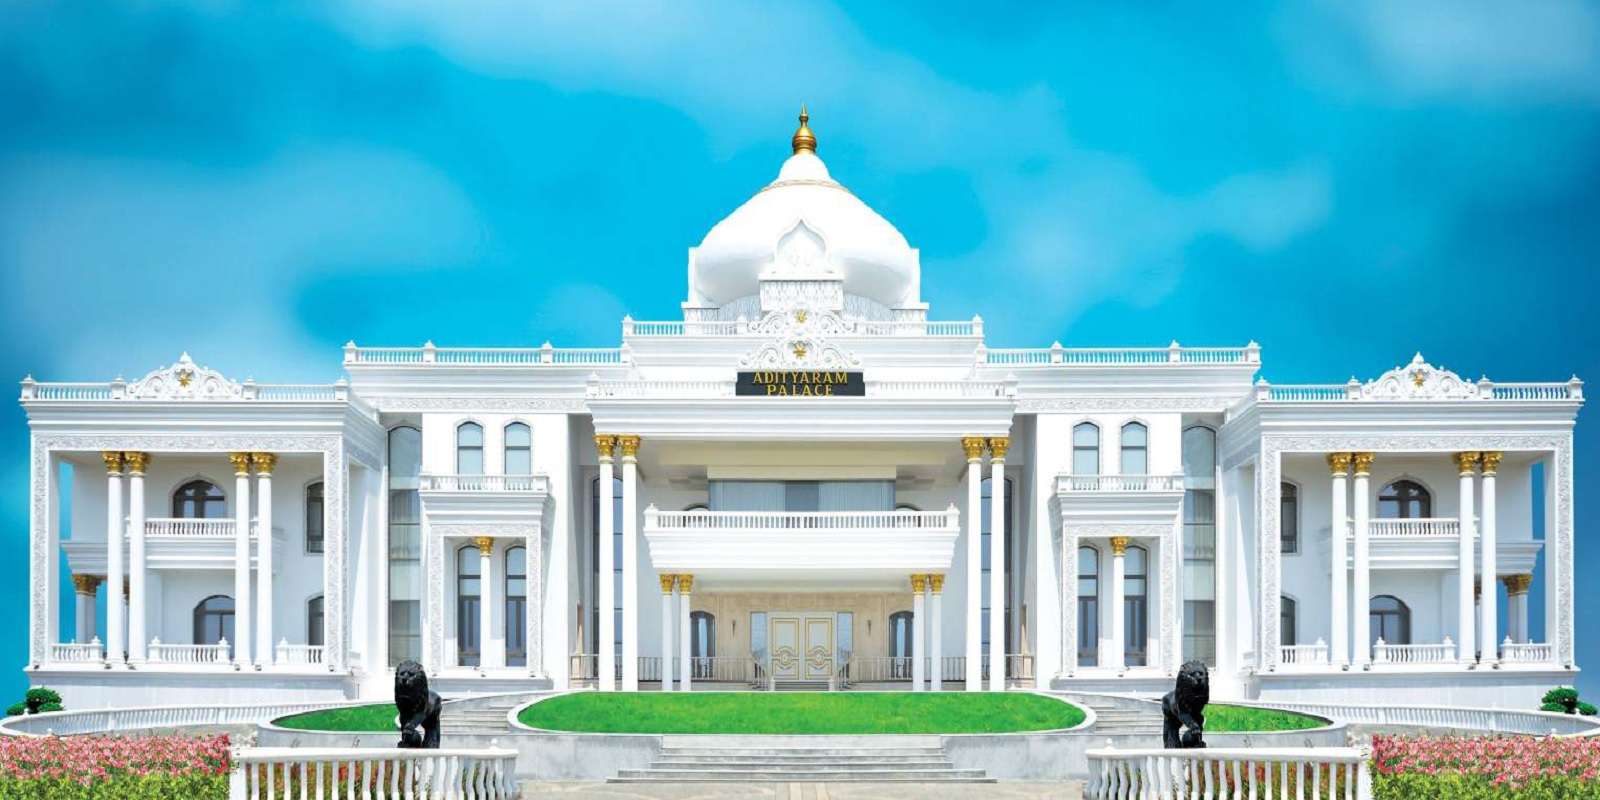 Adityaram Palace City Cover Image